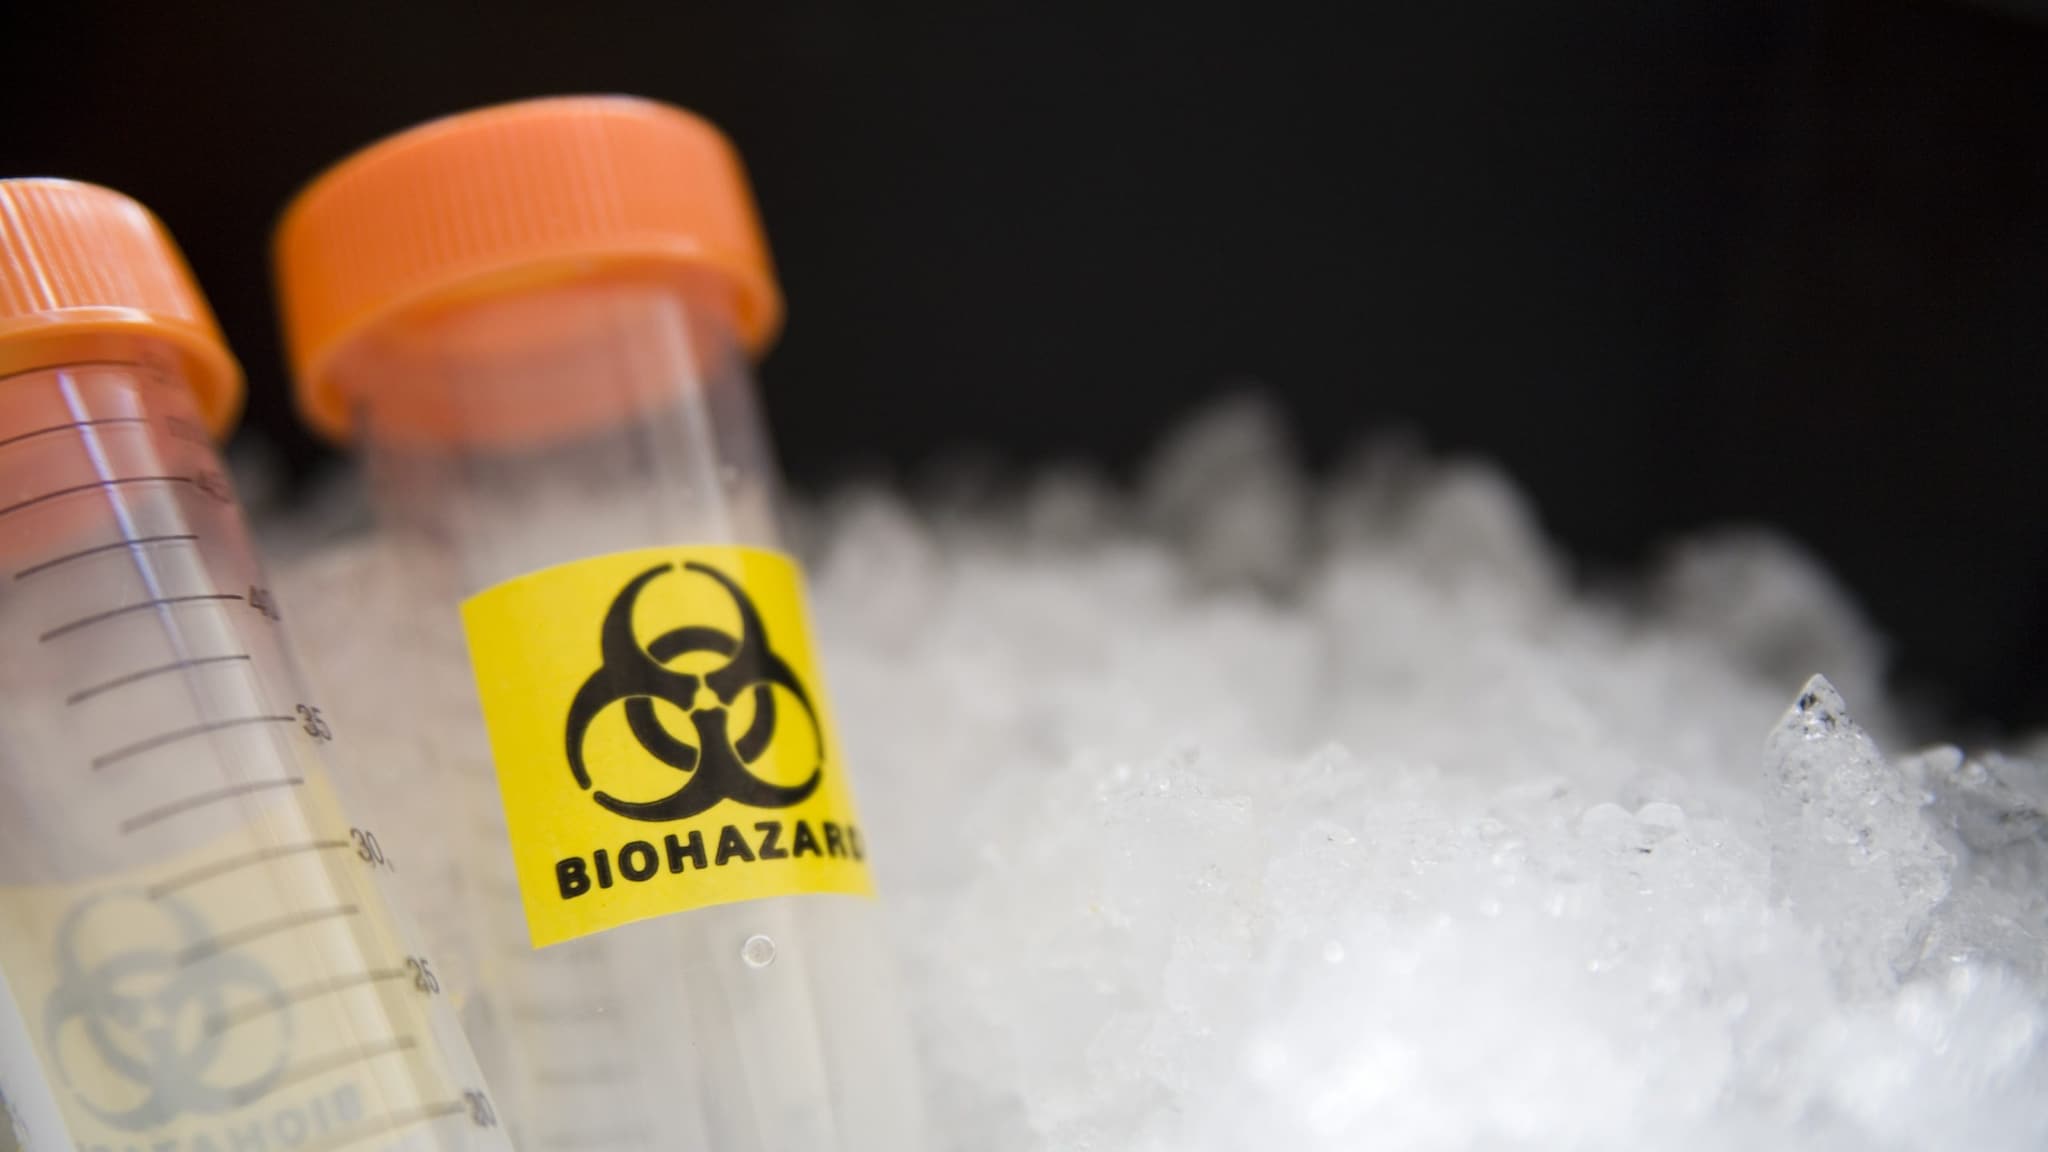 Tubes in styrofoam labelled "biohazard"